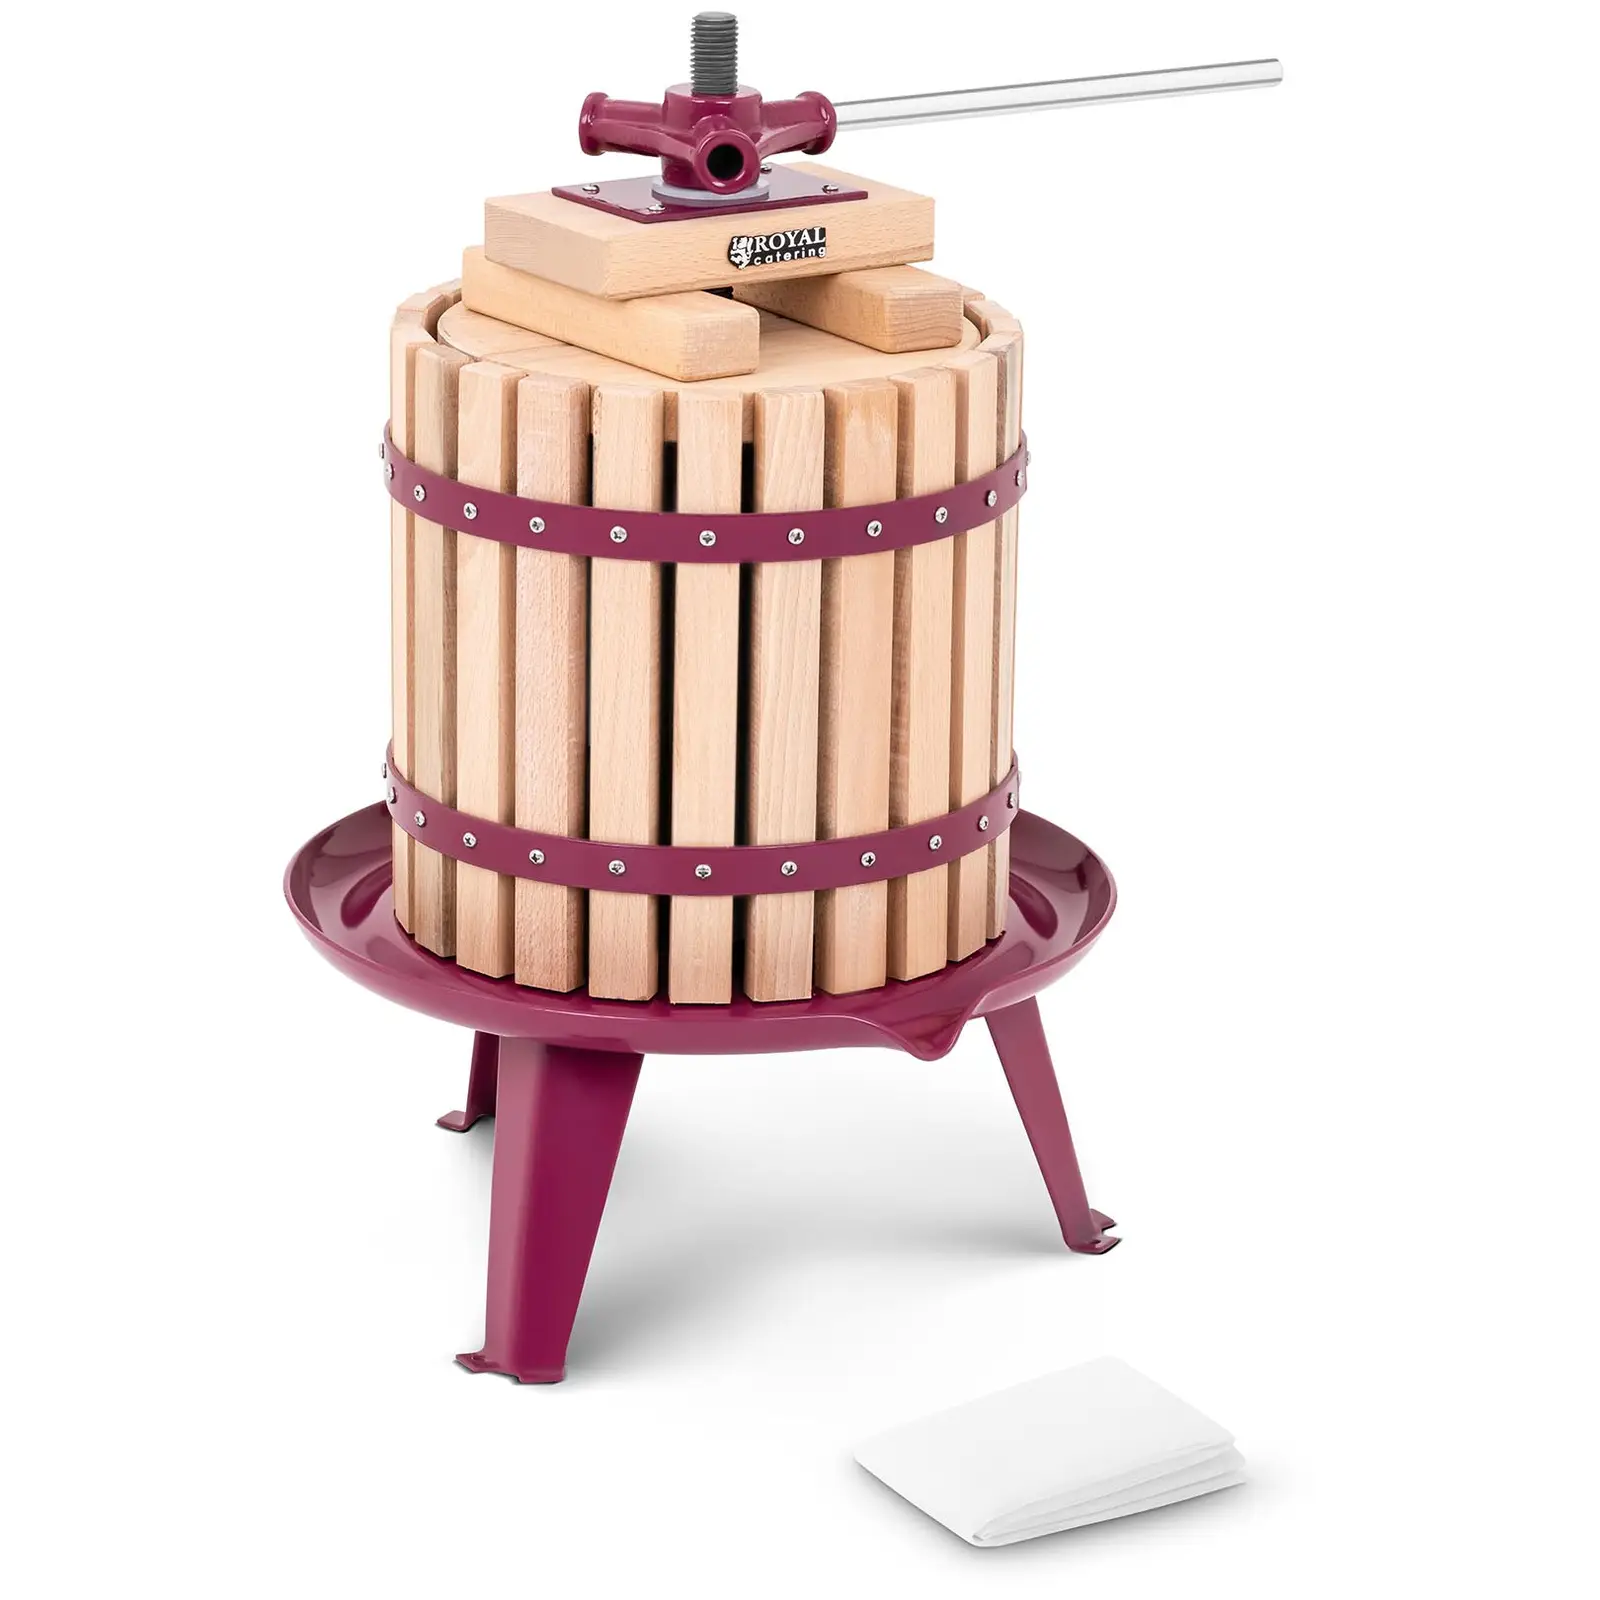 Fruit Press - manual - wooden - 12 L - incl. wooden blocks, pressure plate and pressing cloth